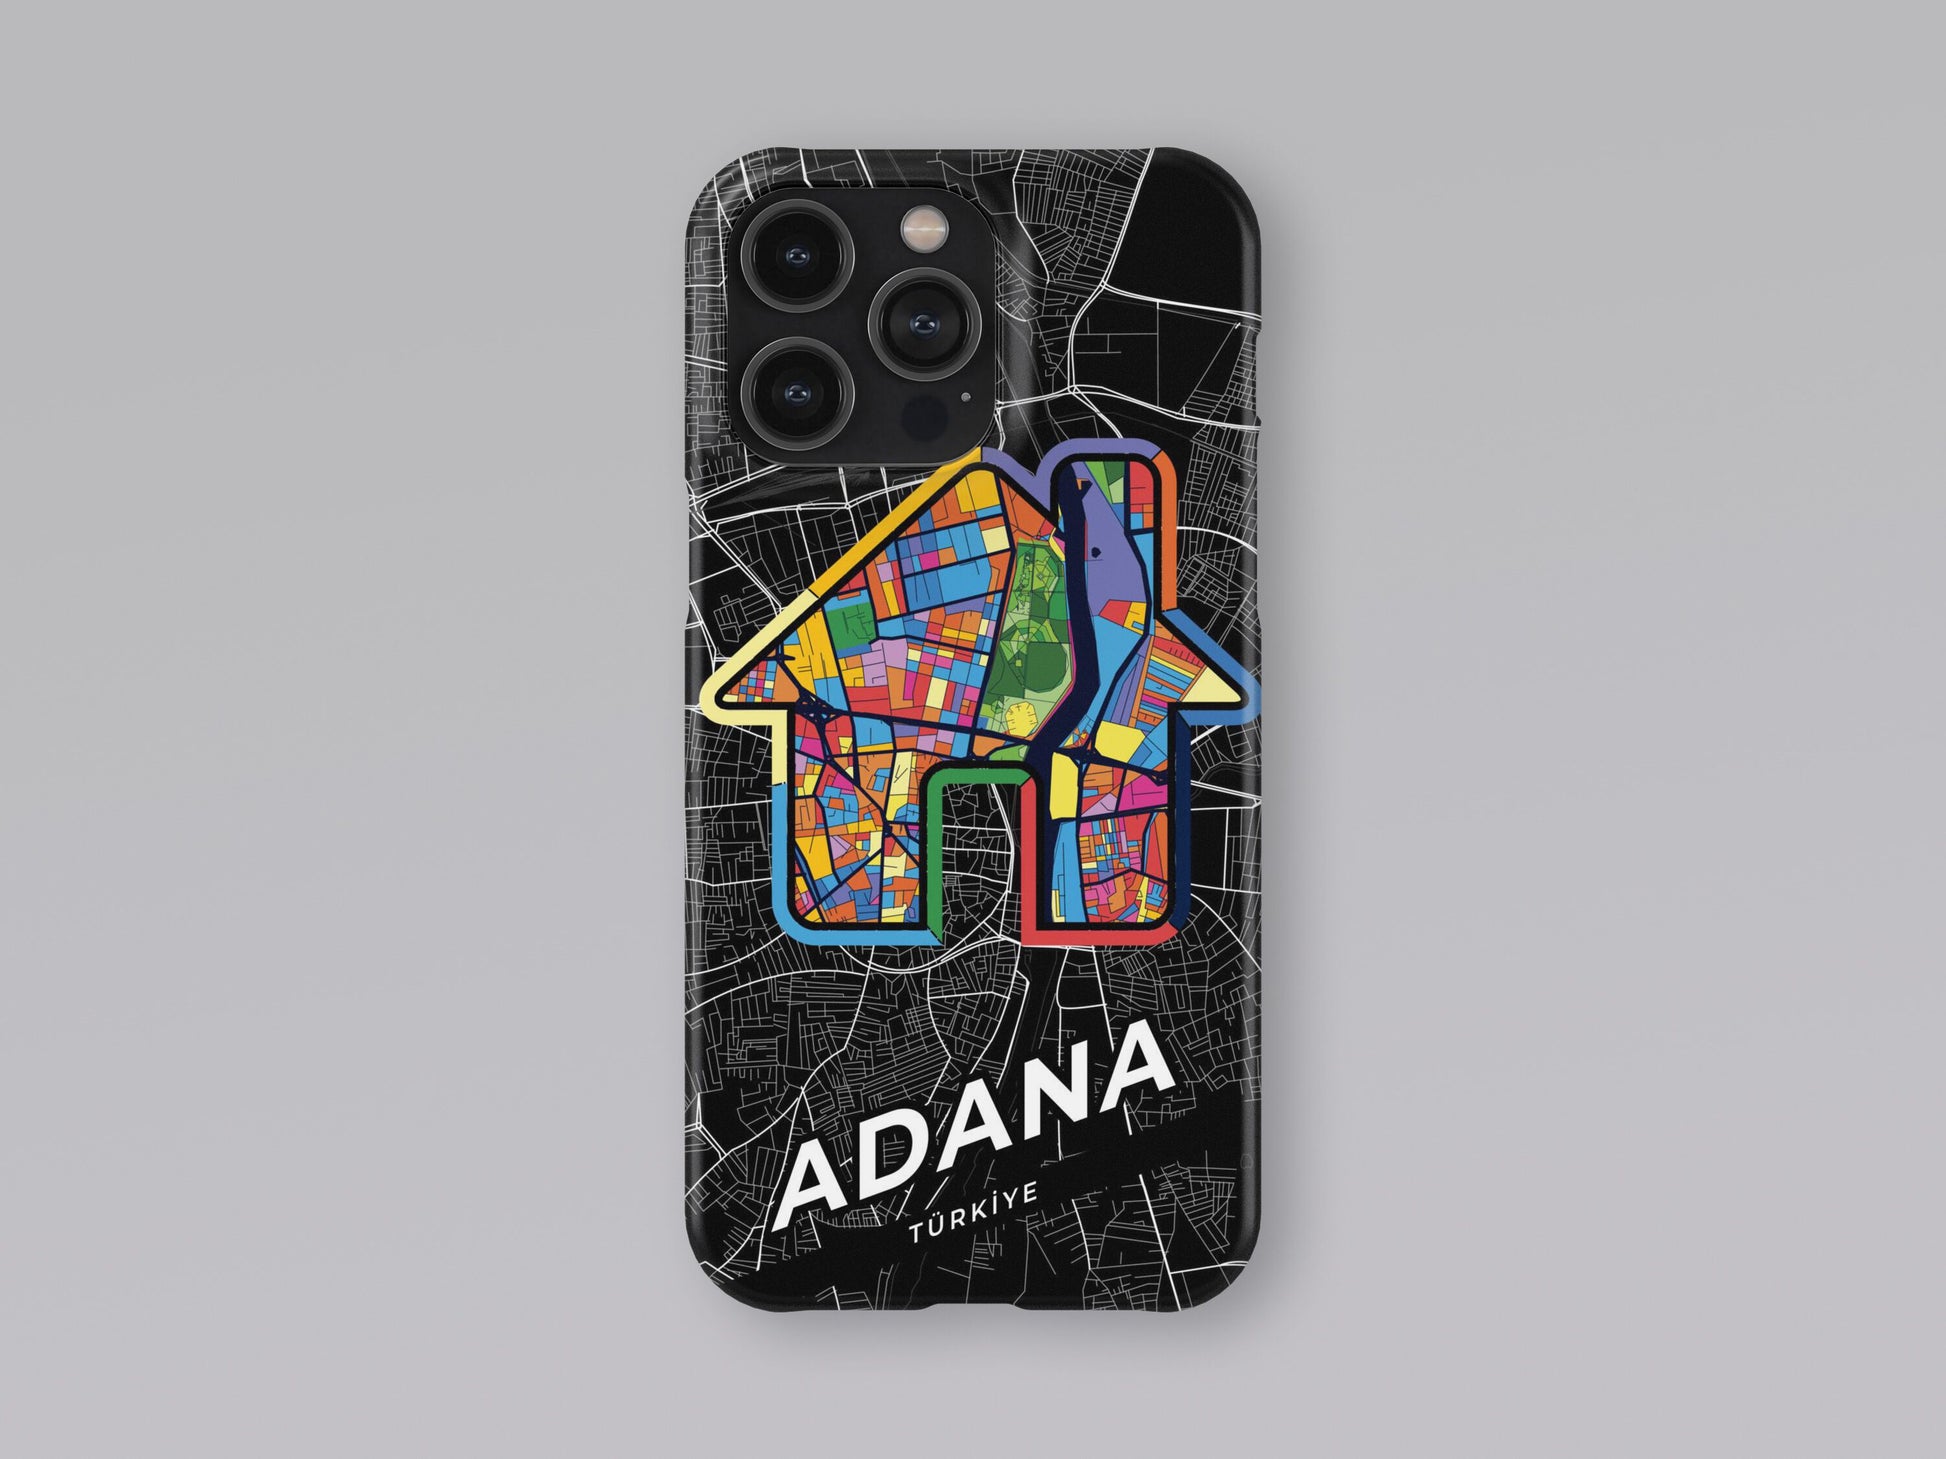 Adana Turkey slim phone case with colorful icon. Birthday, wedding or housewarming gift. Couple match cases. 3